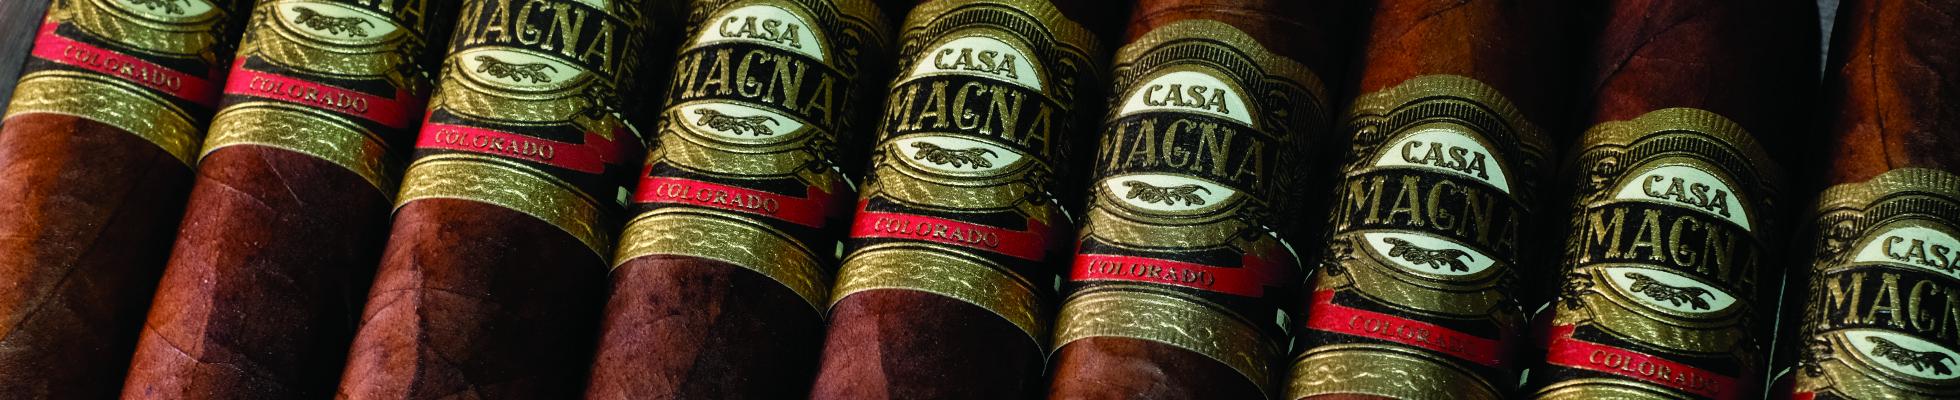 сигары Casa Magna Colorado